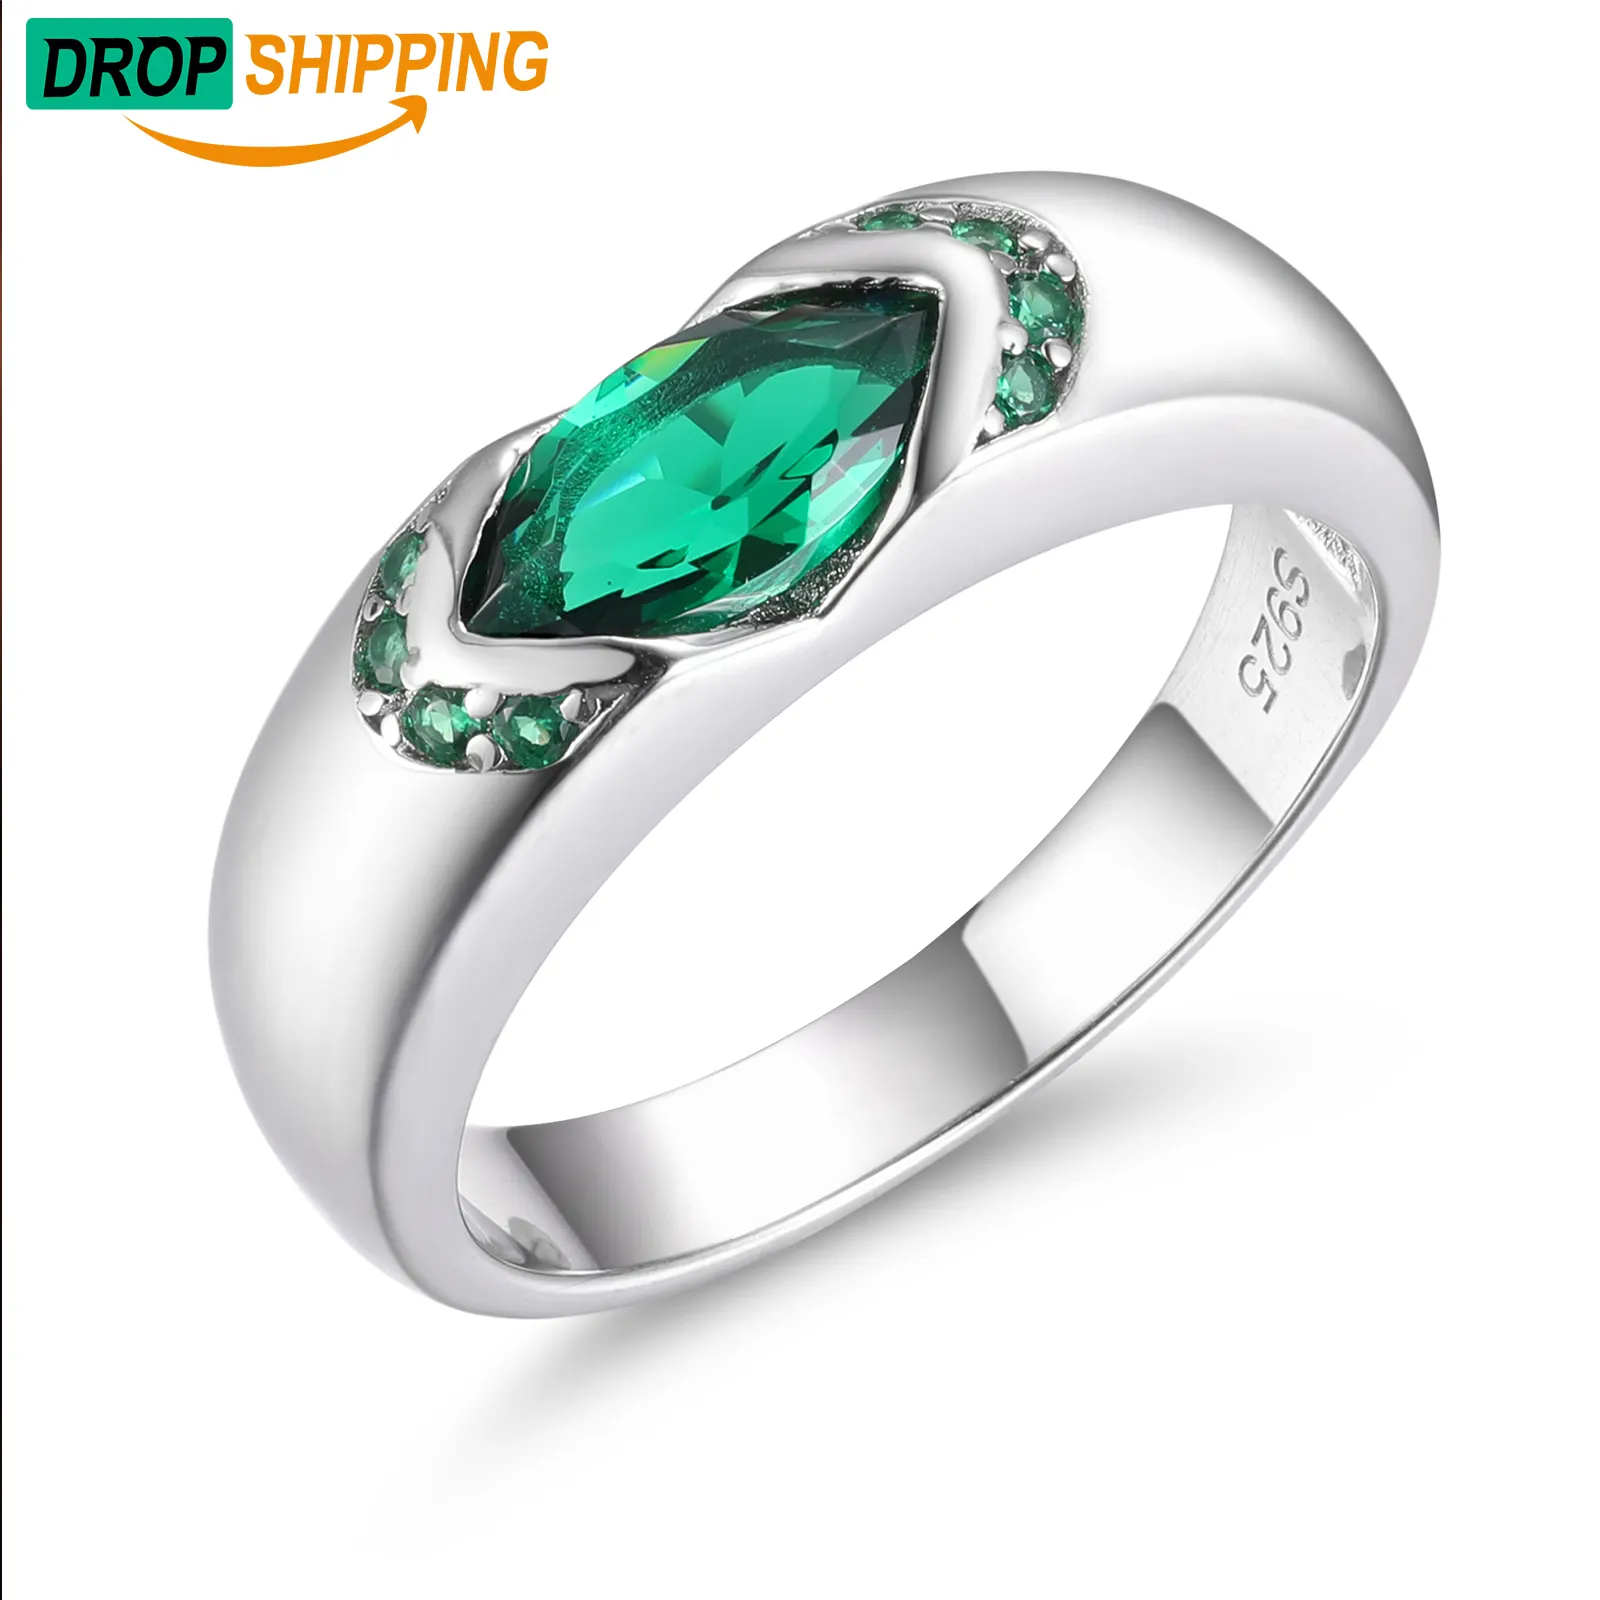 Dropshipping 1ct Pear Cut Moissanite Evil Eye Wedding Ring For Men 18k White Gold Plated 925 Sterling Silver Diamond Engagement